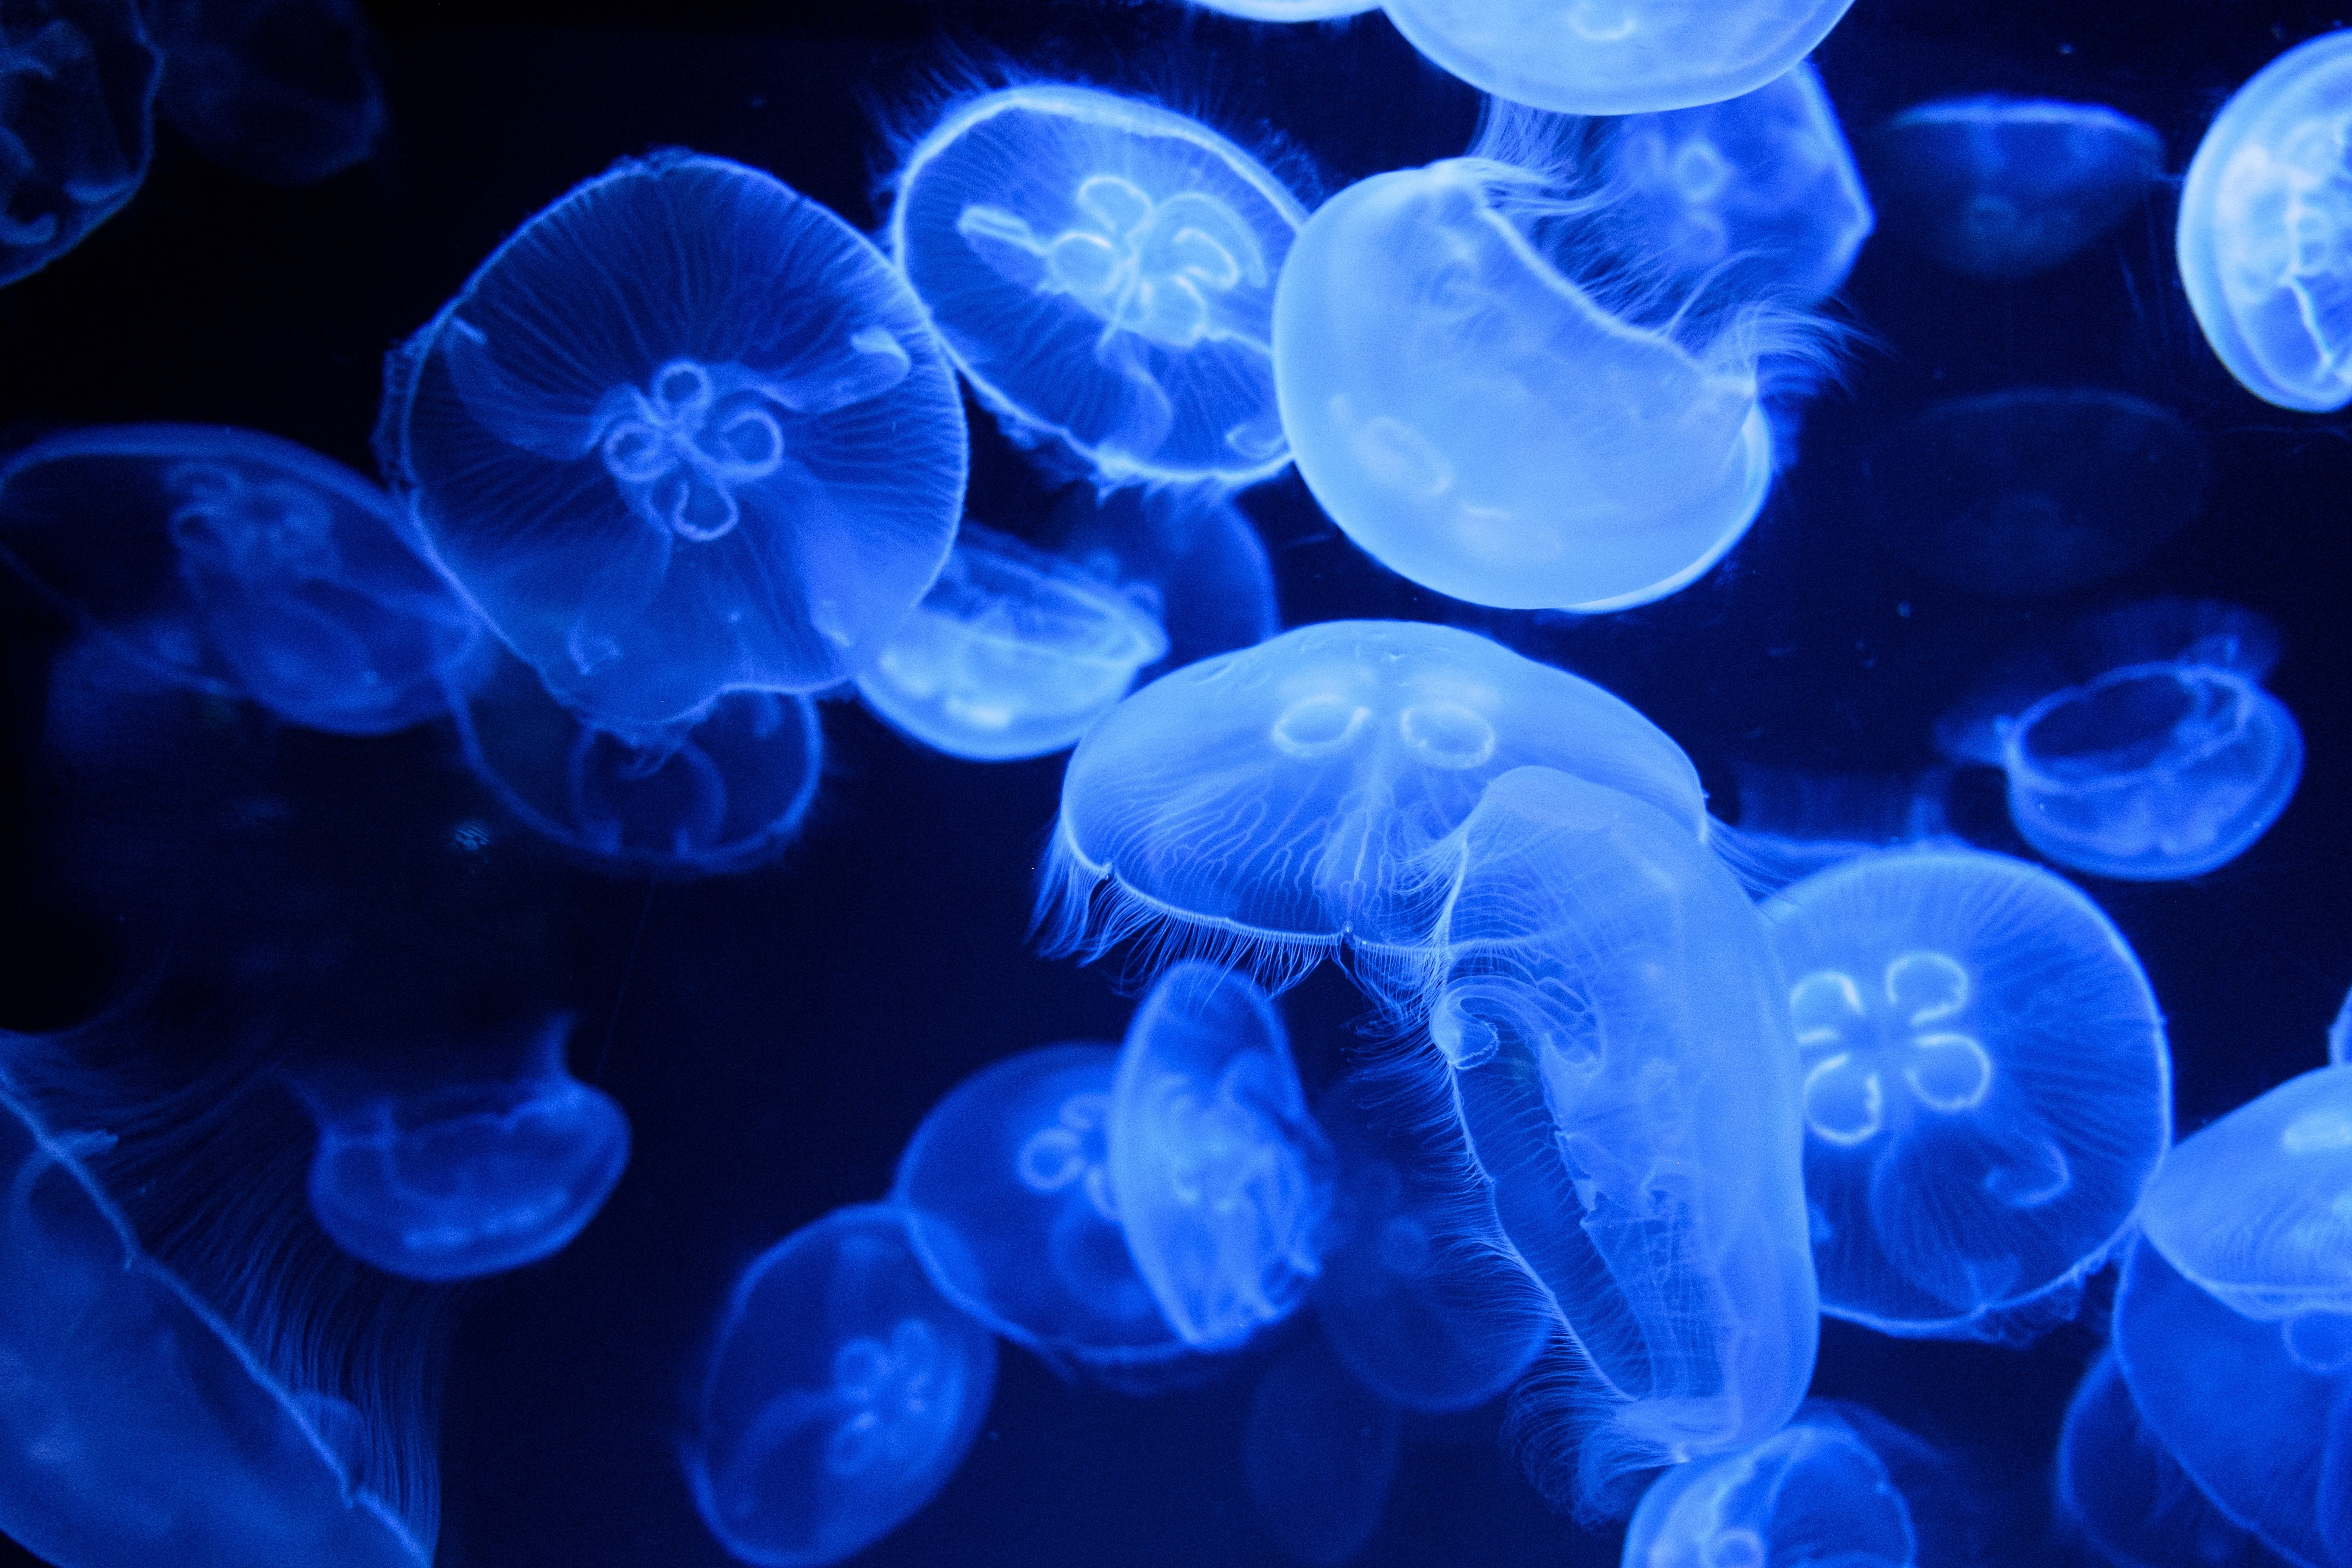 HD wallpaper, Blue Jellyfish, Aquarium, Transparent, Marine Life, Underwater, Dark Background, Bioluminescence, 5K, Glowing